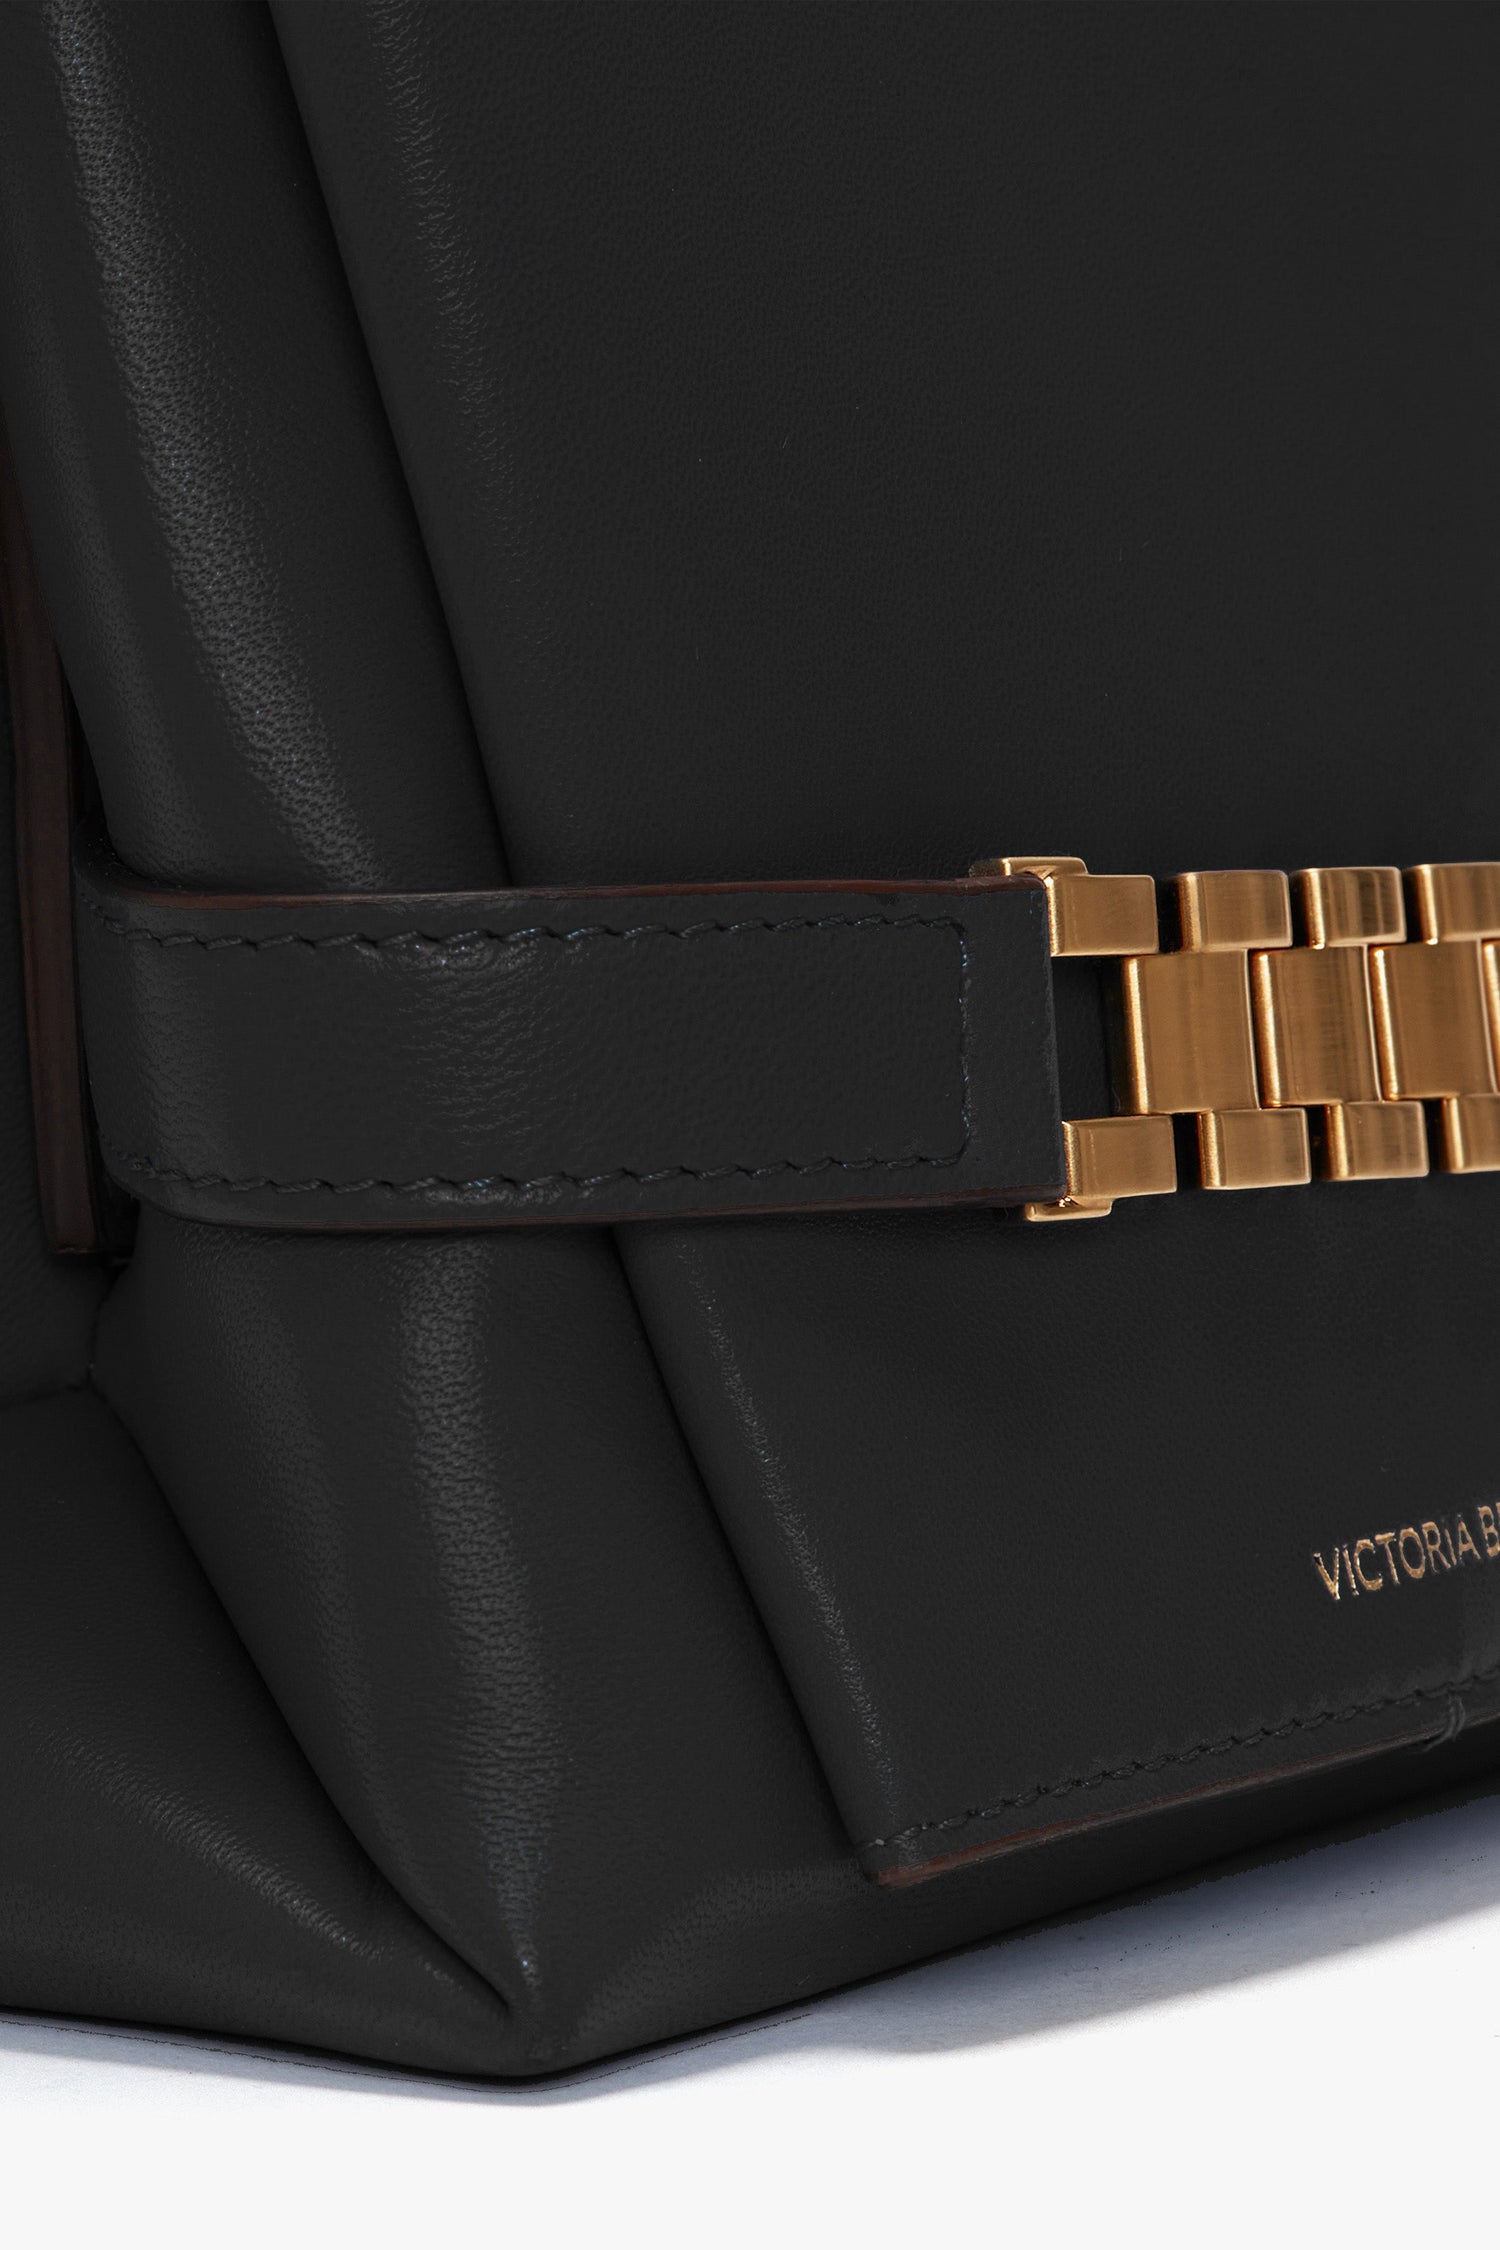 Lot of 3 Victoria's Secret Cosmetic Zip Pouches Bags - Black, Metallic Gold